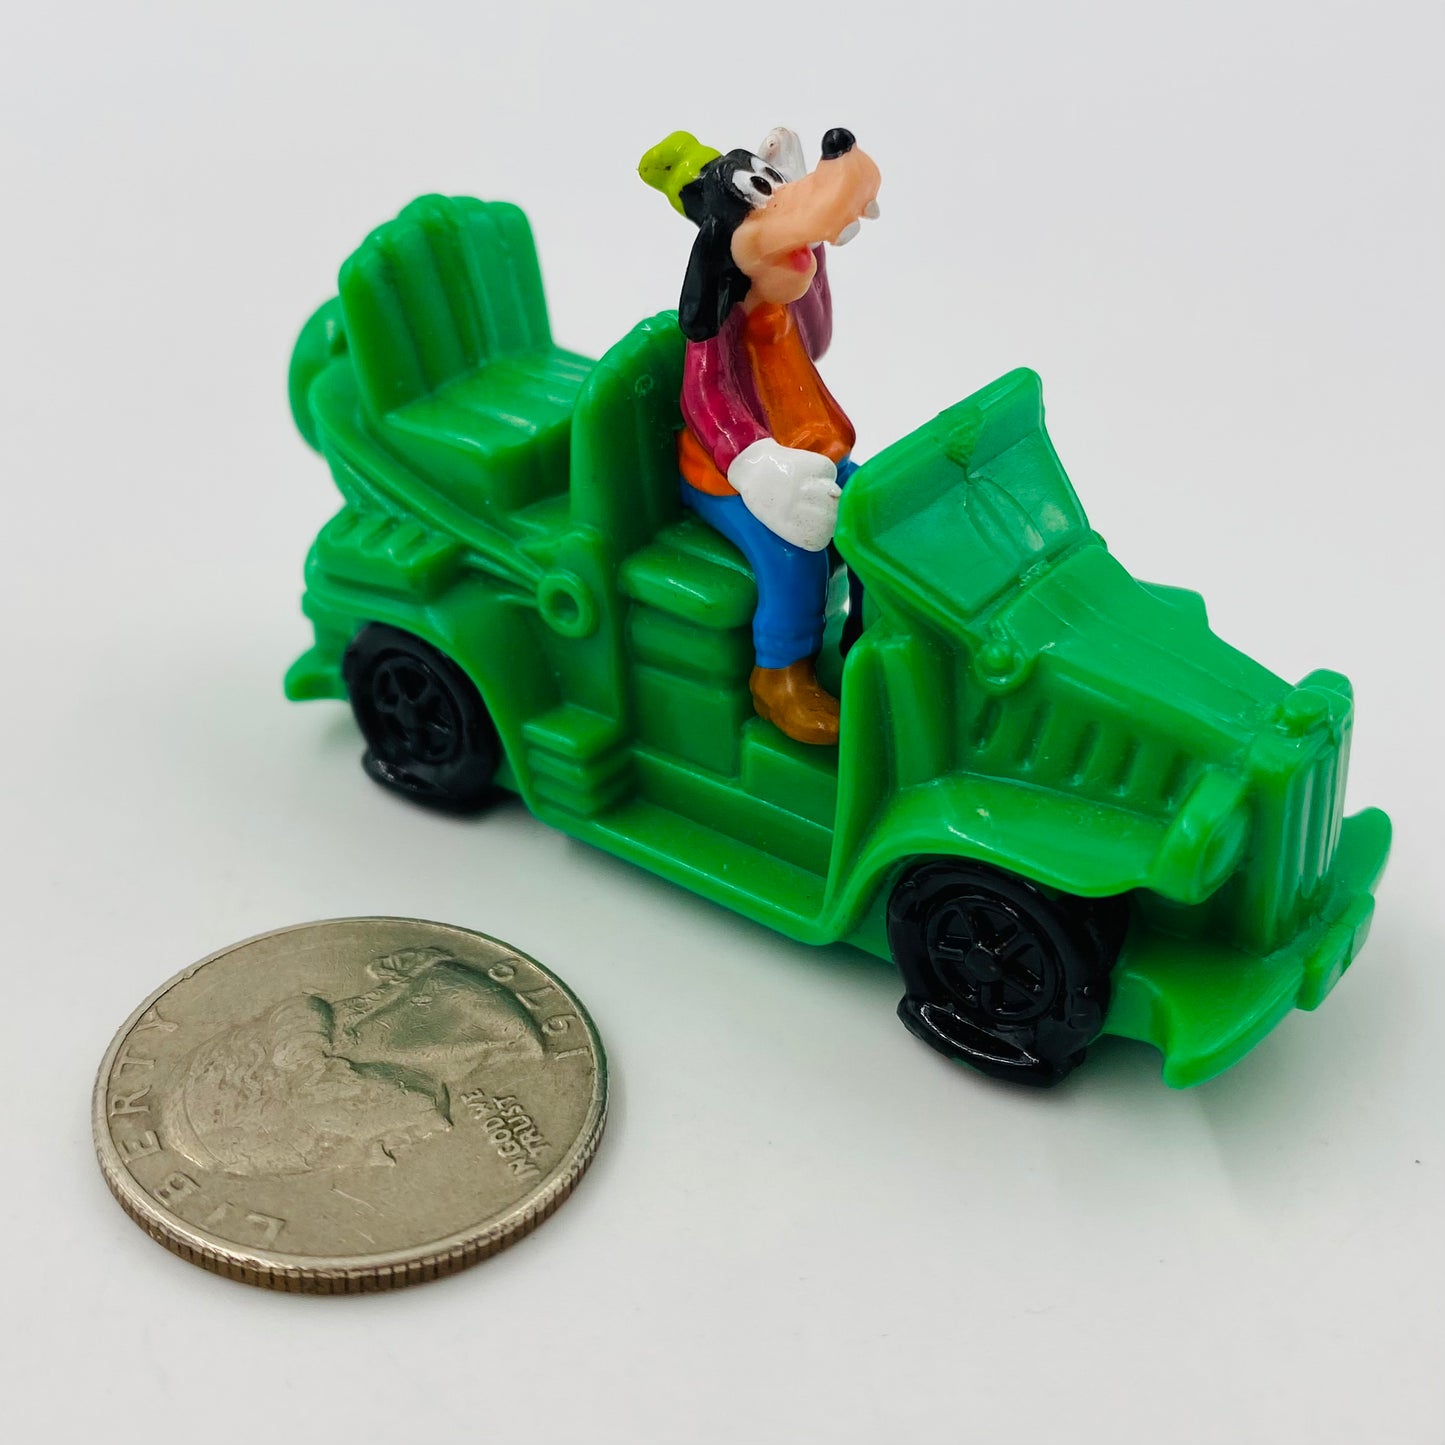 Mickey's Toontown Disneyland Goofy wind-up car Burger King Kids' Meal toy (1993) loose